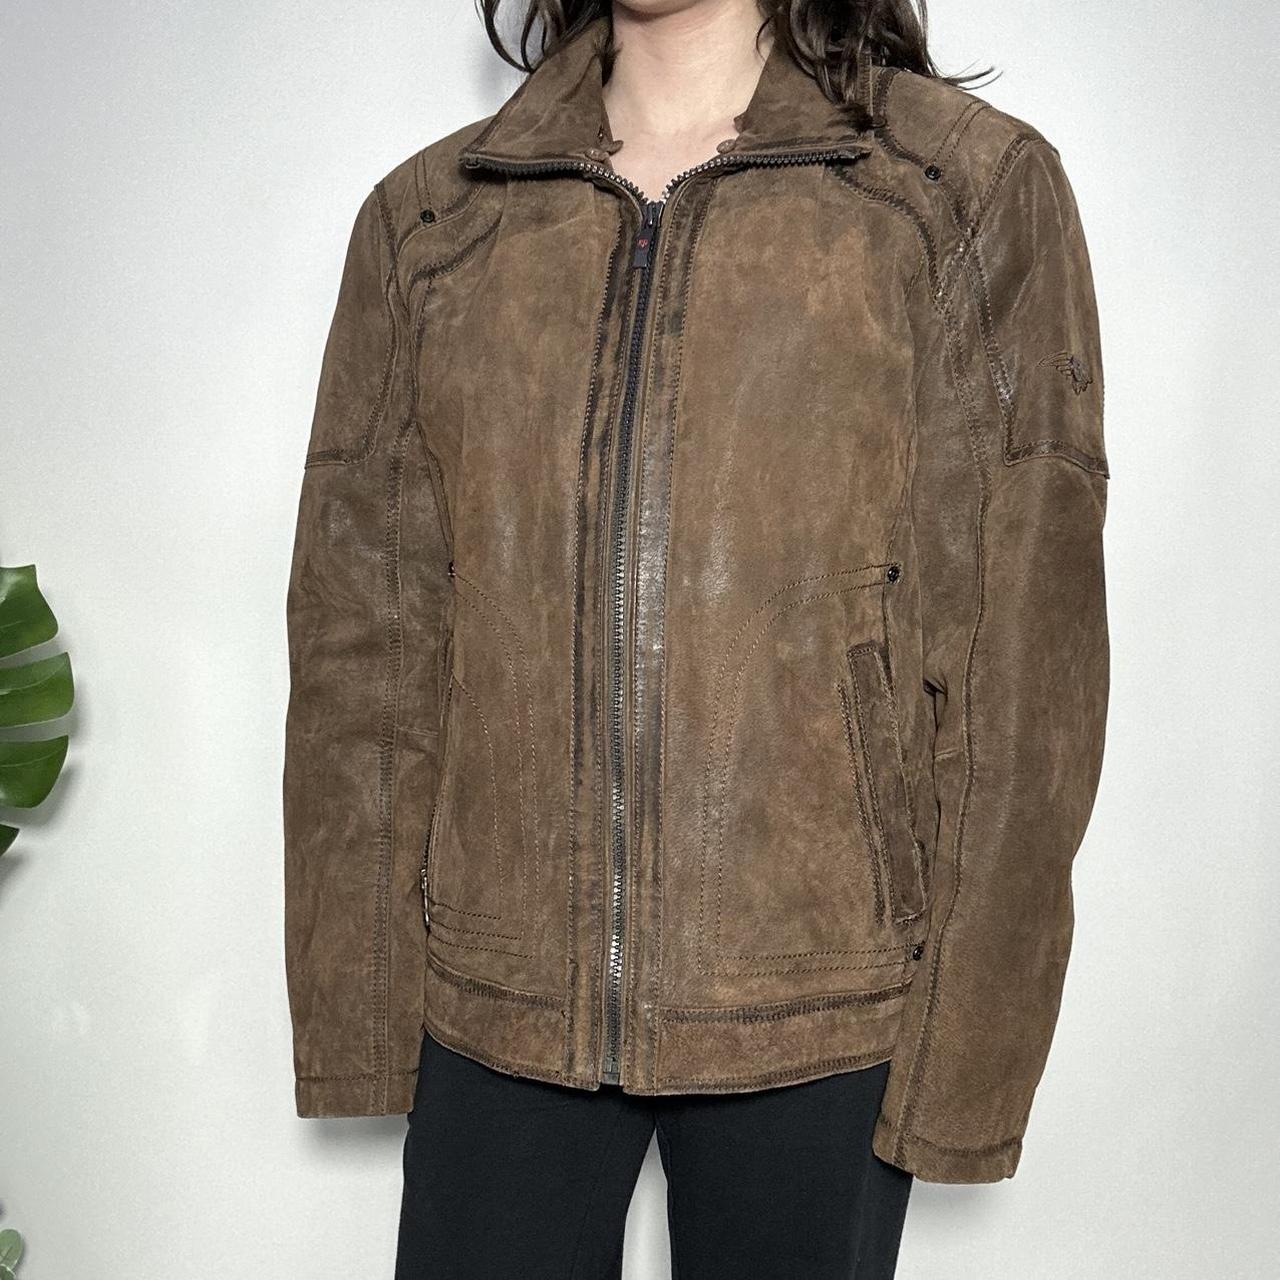 Vintage 90s chocolate brown leather motorcycle jacket